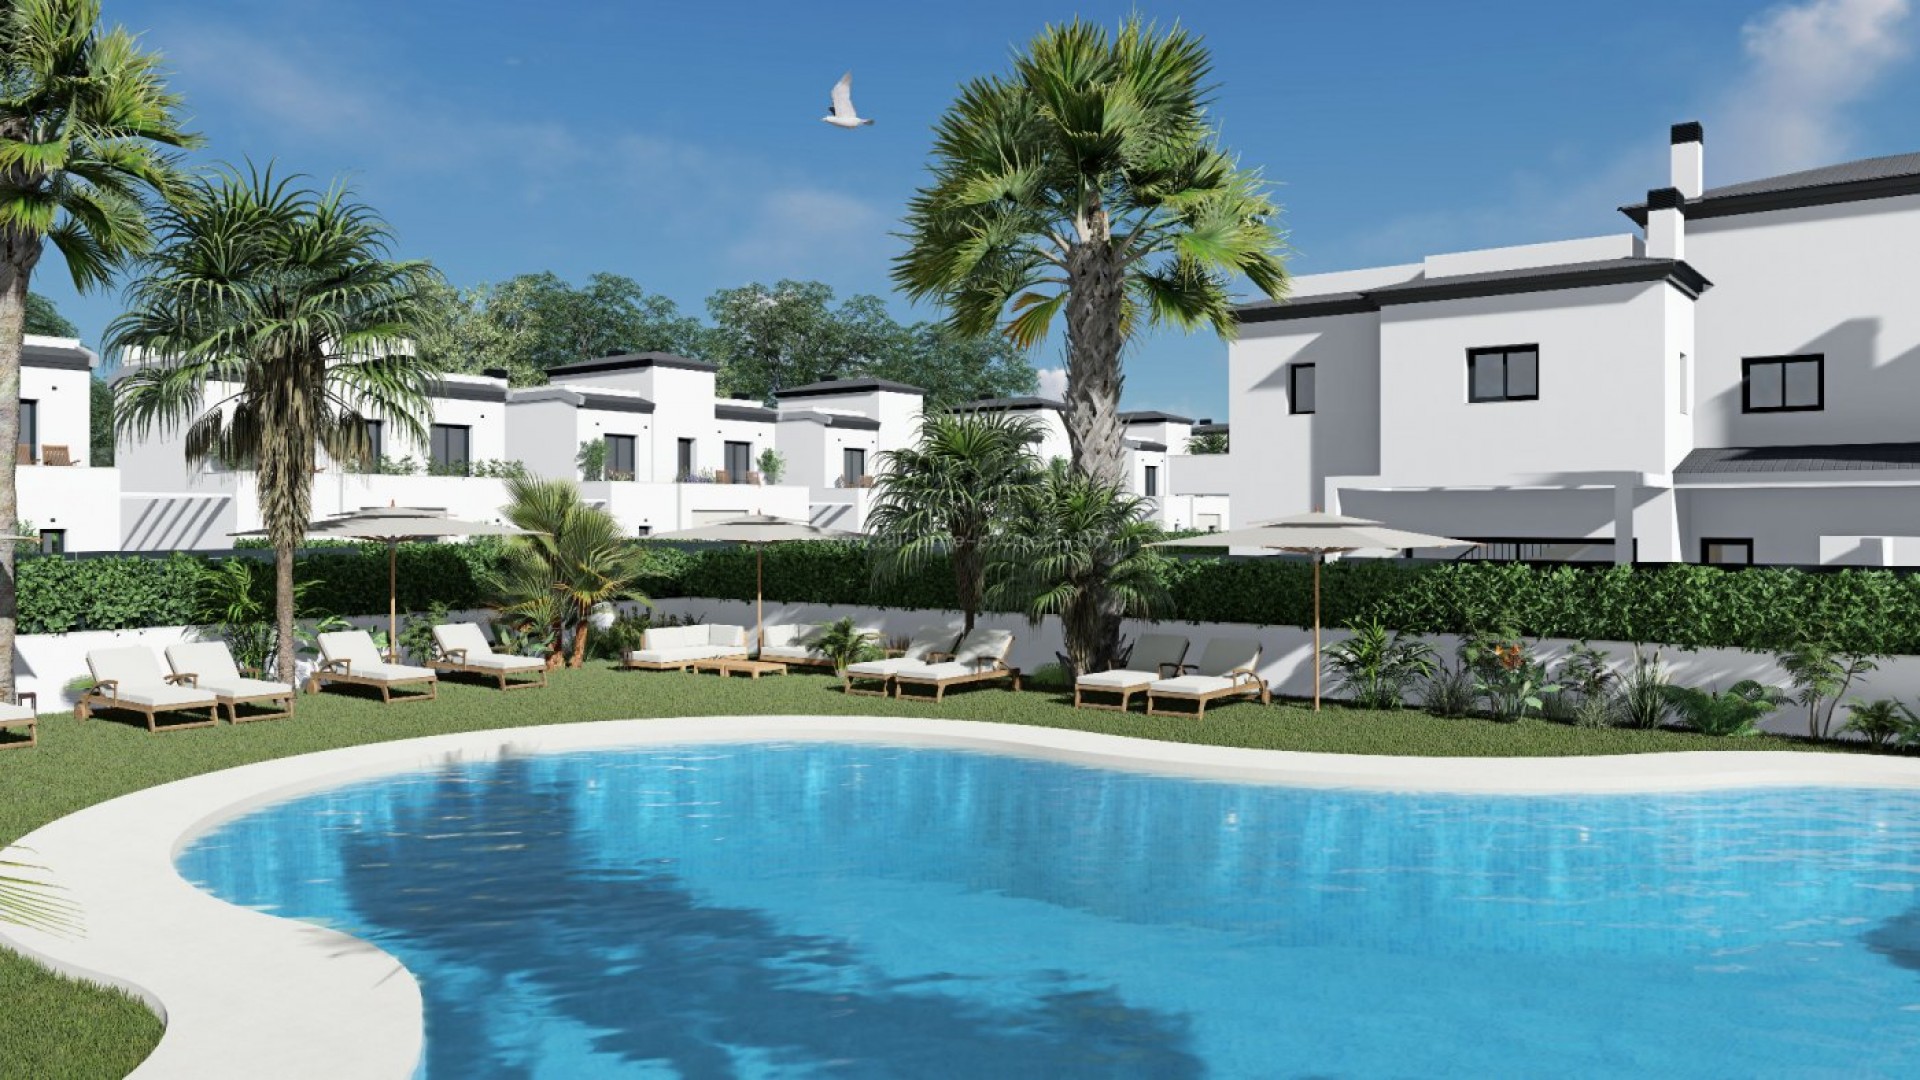 3 exclusive bungalows in Gran Alacant, Santa Pola, 2/3 bedrooms, 2/3 bathrooms, private garden, communal pool, garden area and playground,